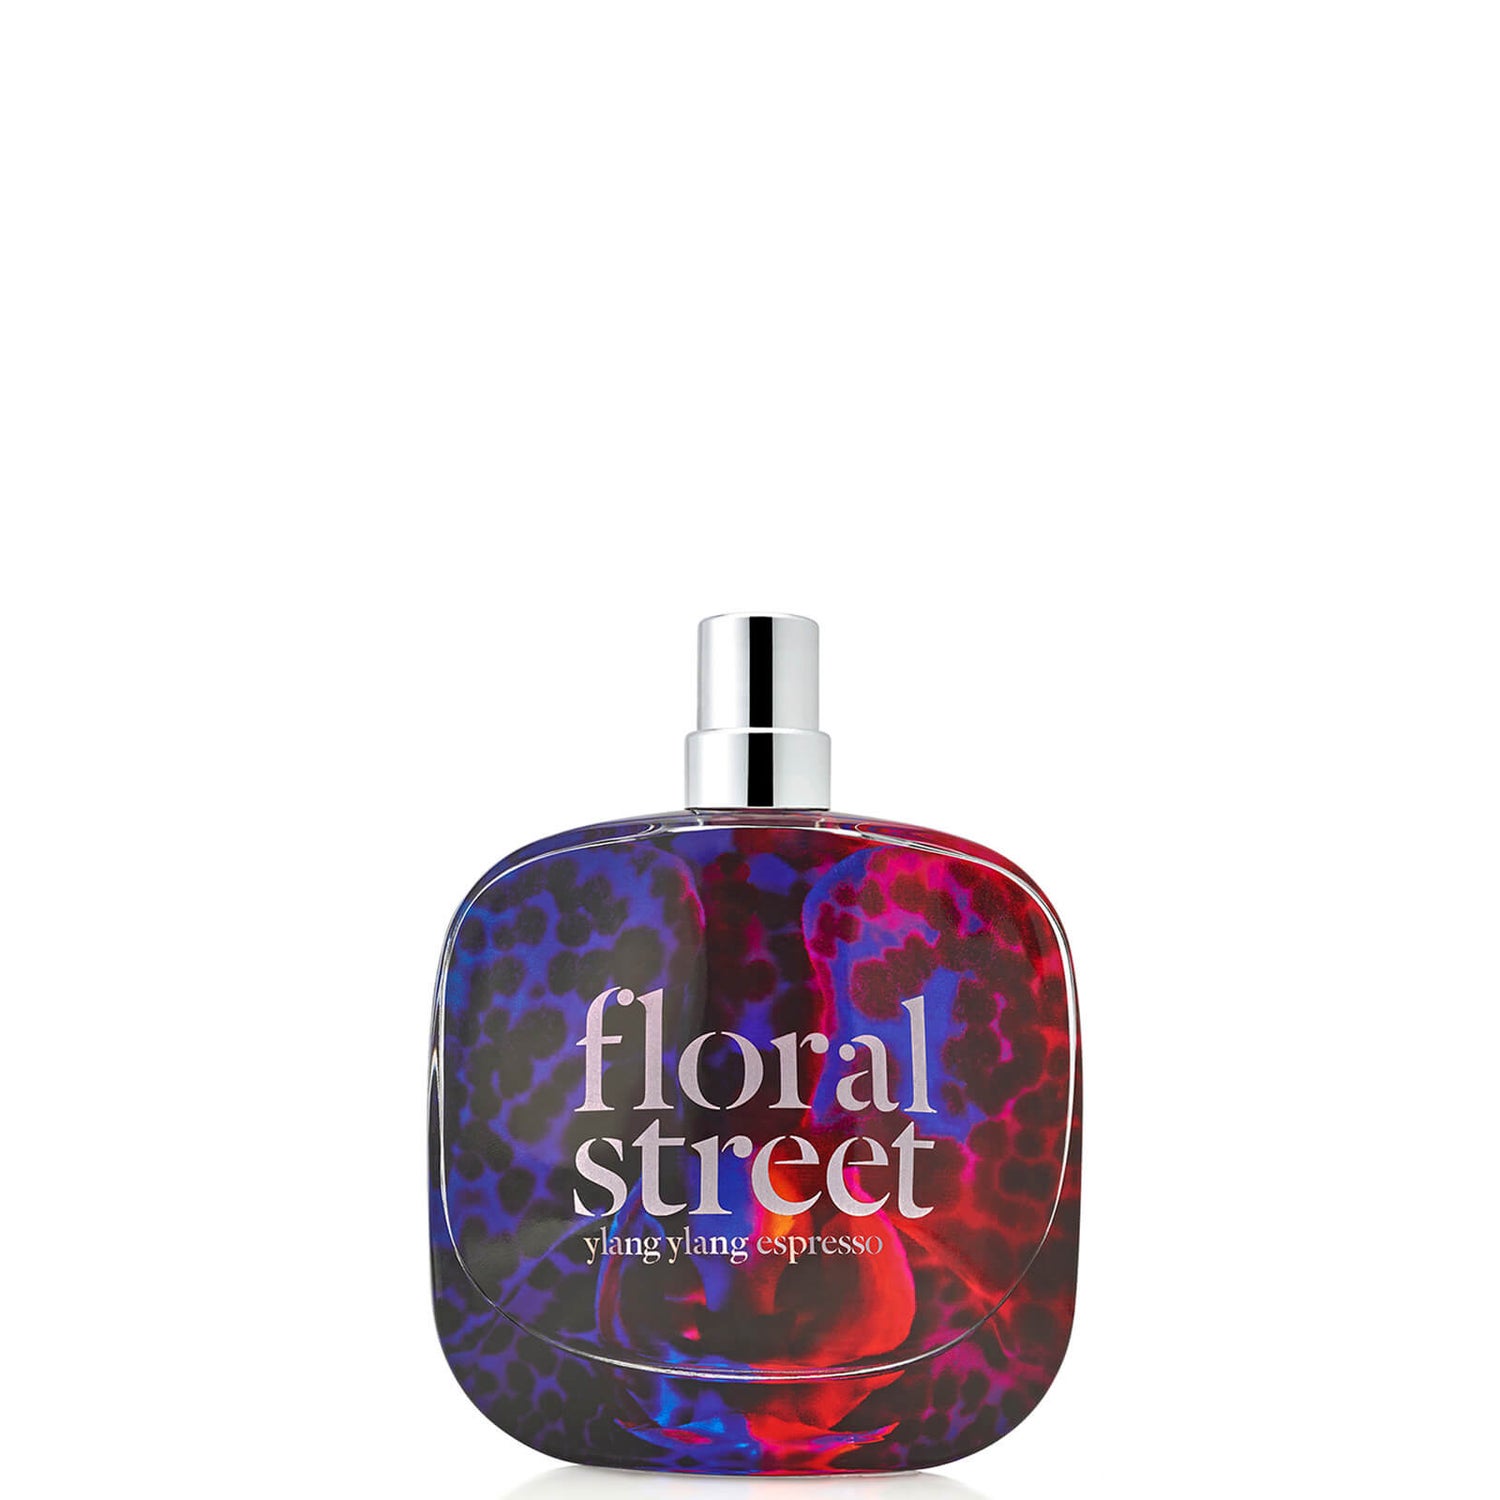 Floral Street Ylang Ylang Espresso Eau de Parfum 50ml